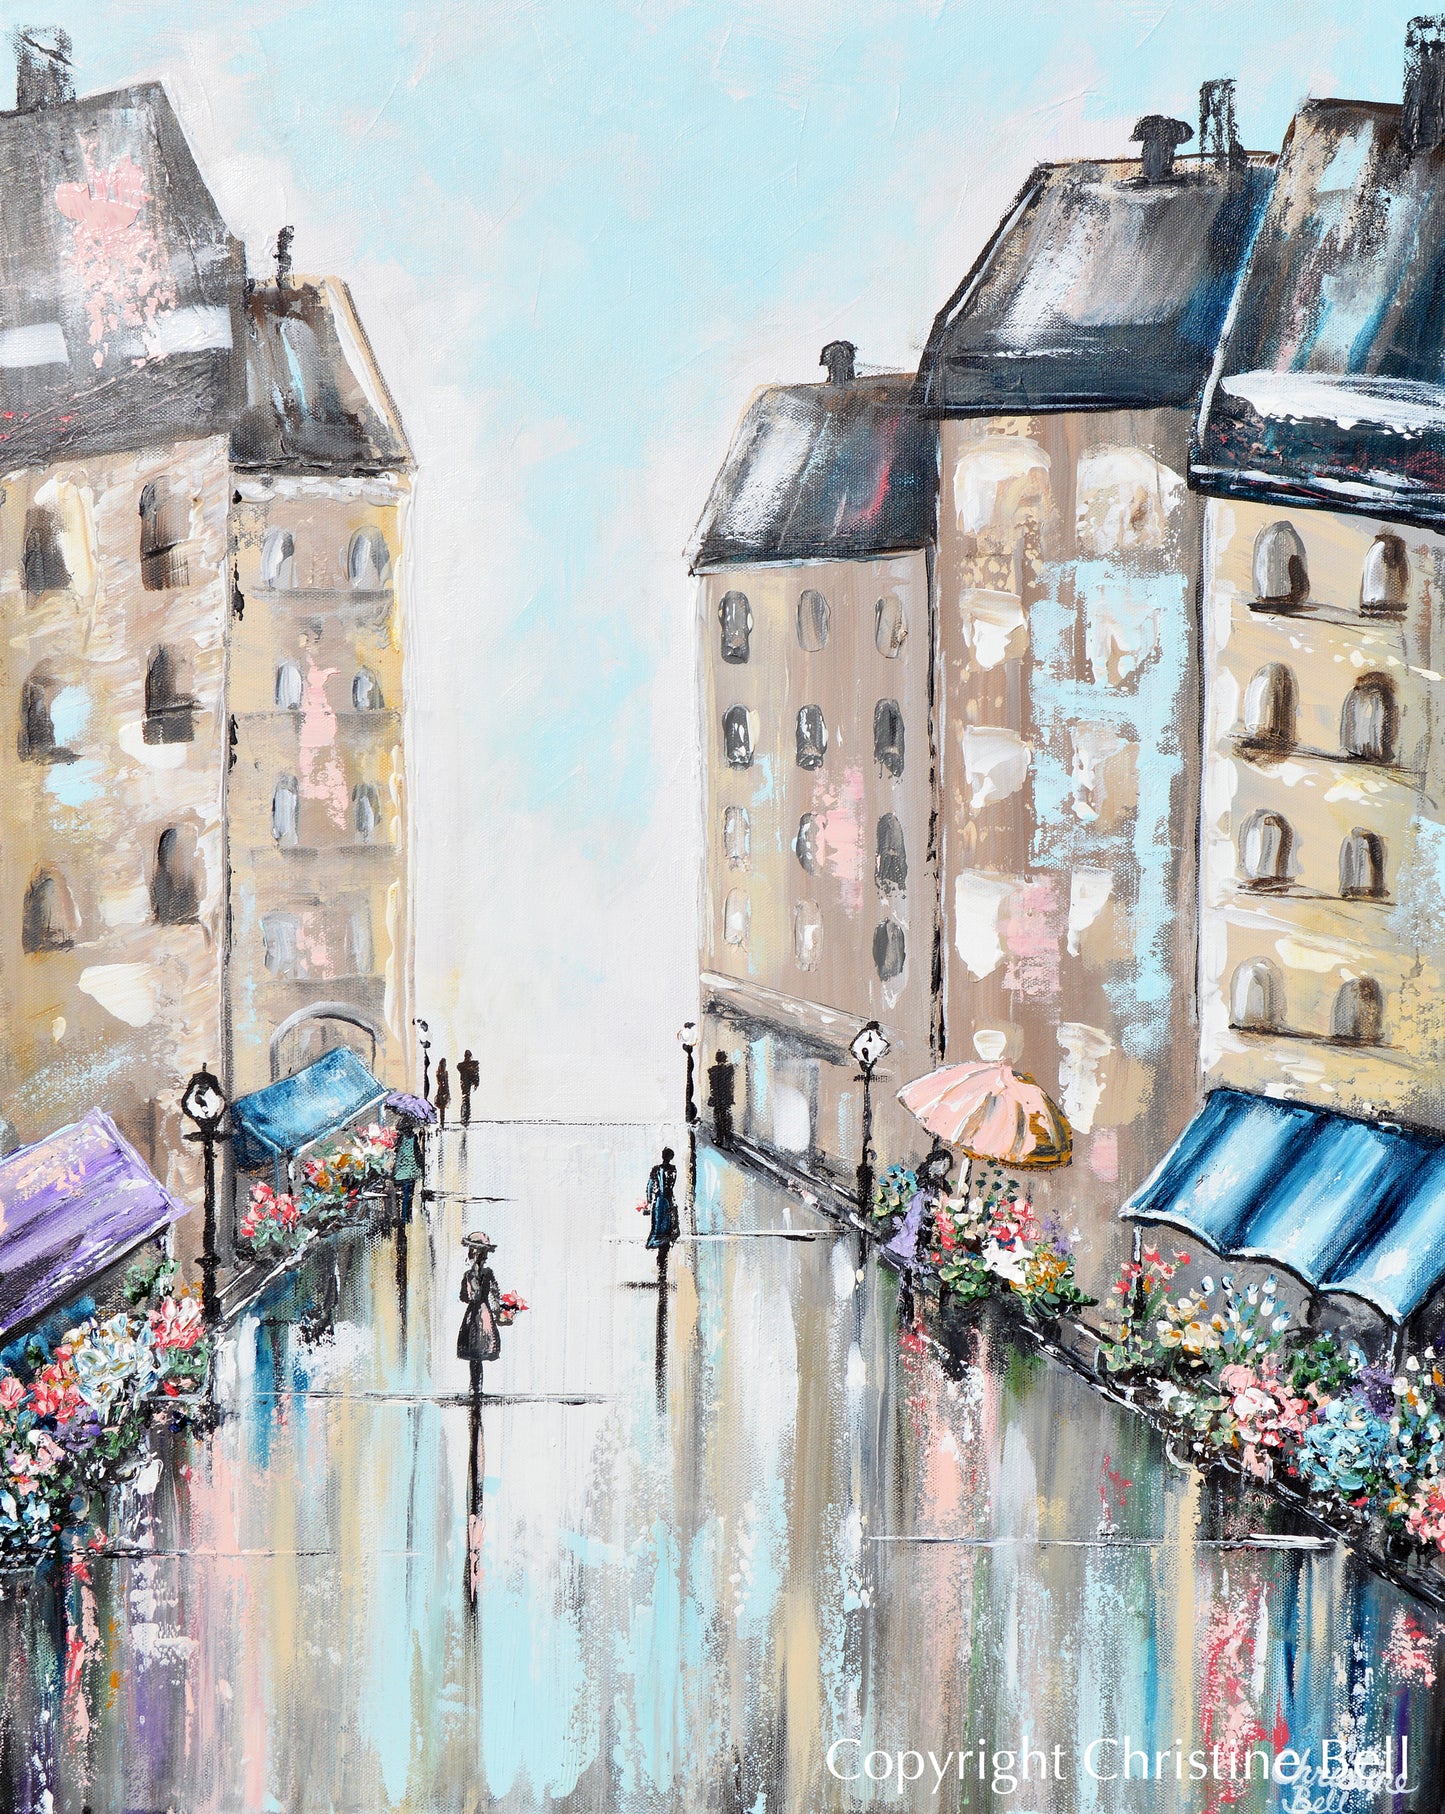 Art Abstract Painting Canvas Print Couple Umbrella Romantic Walk Rain –  Contemporary Art by Christine